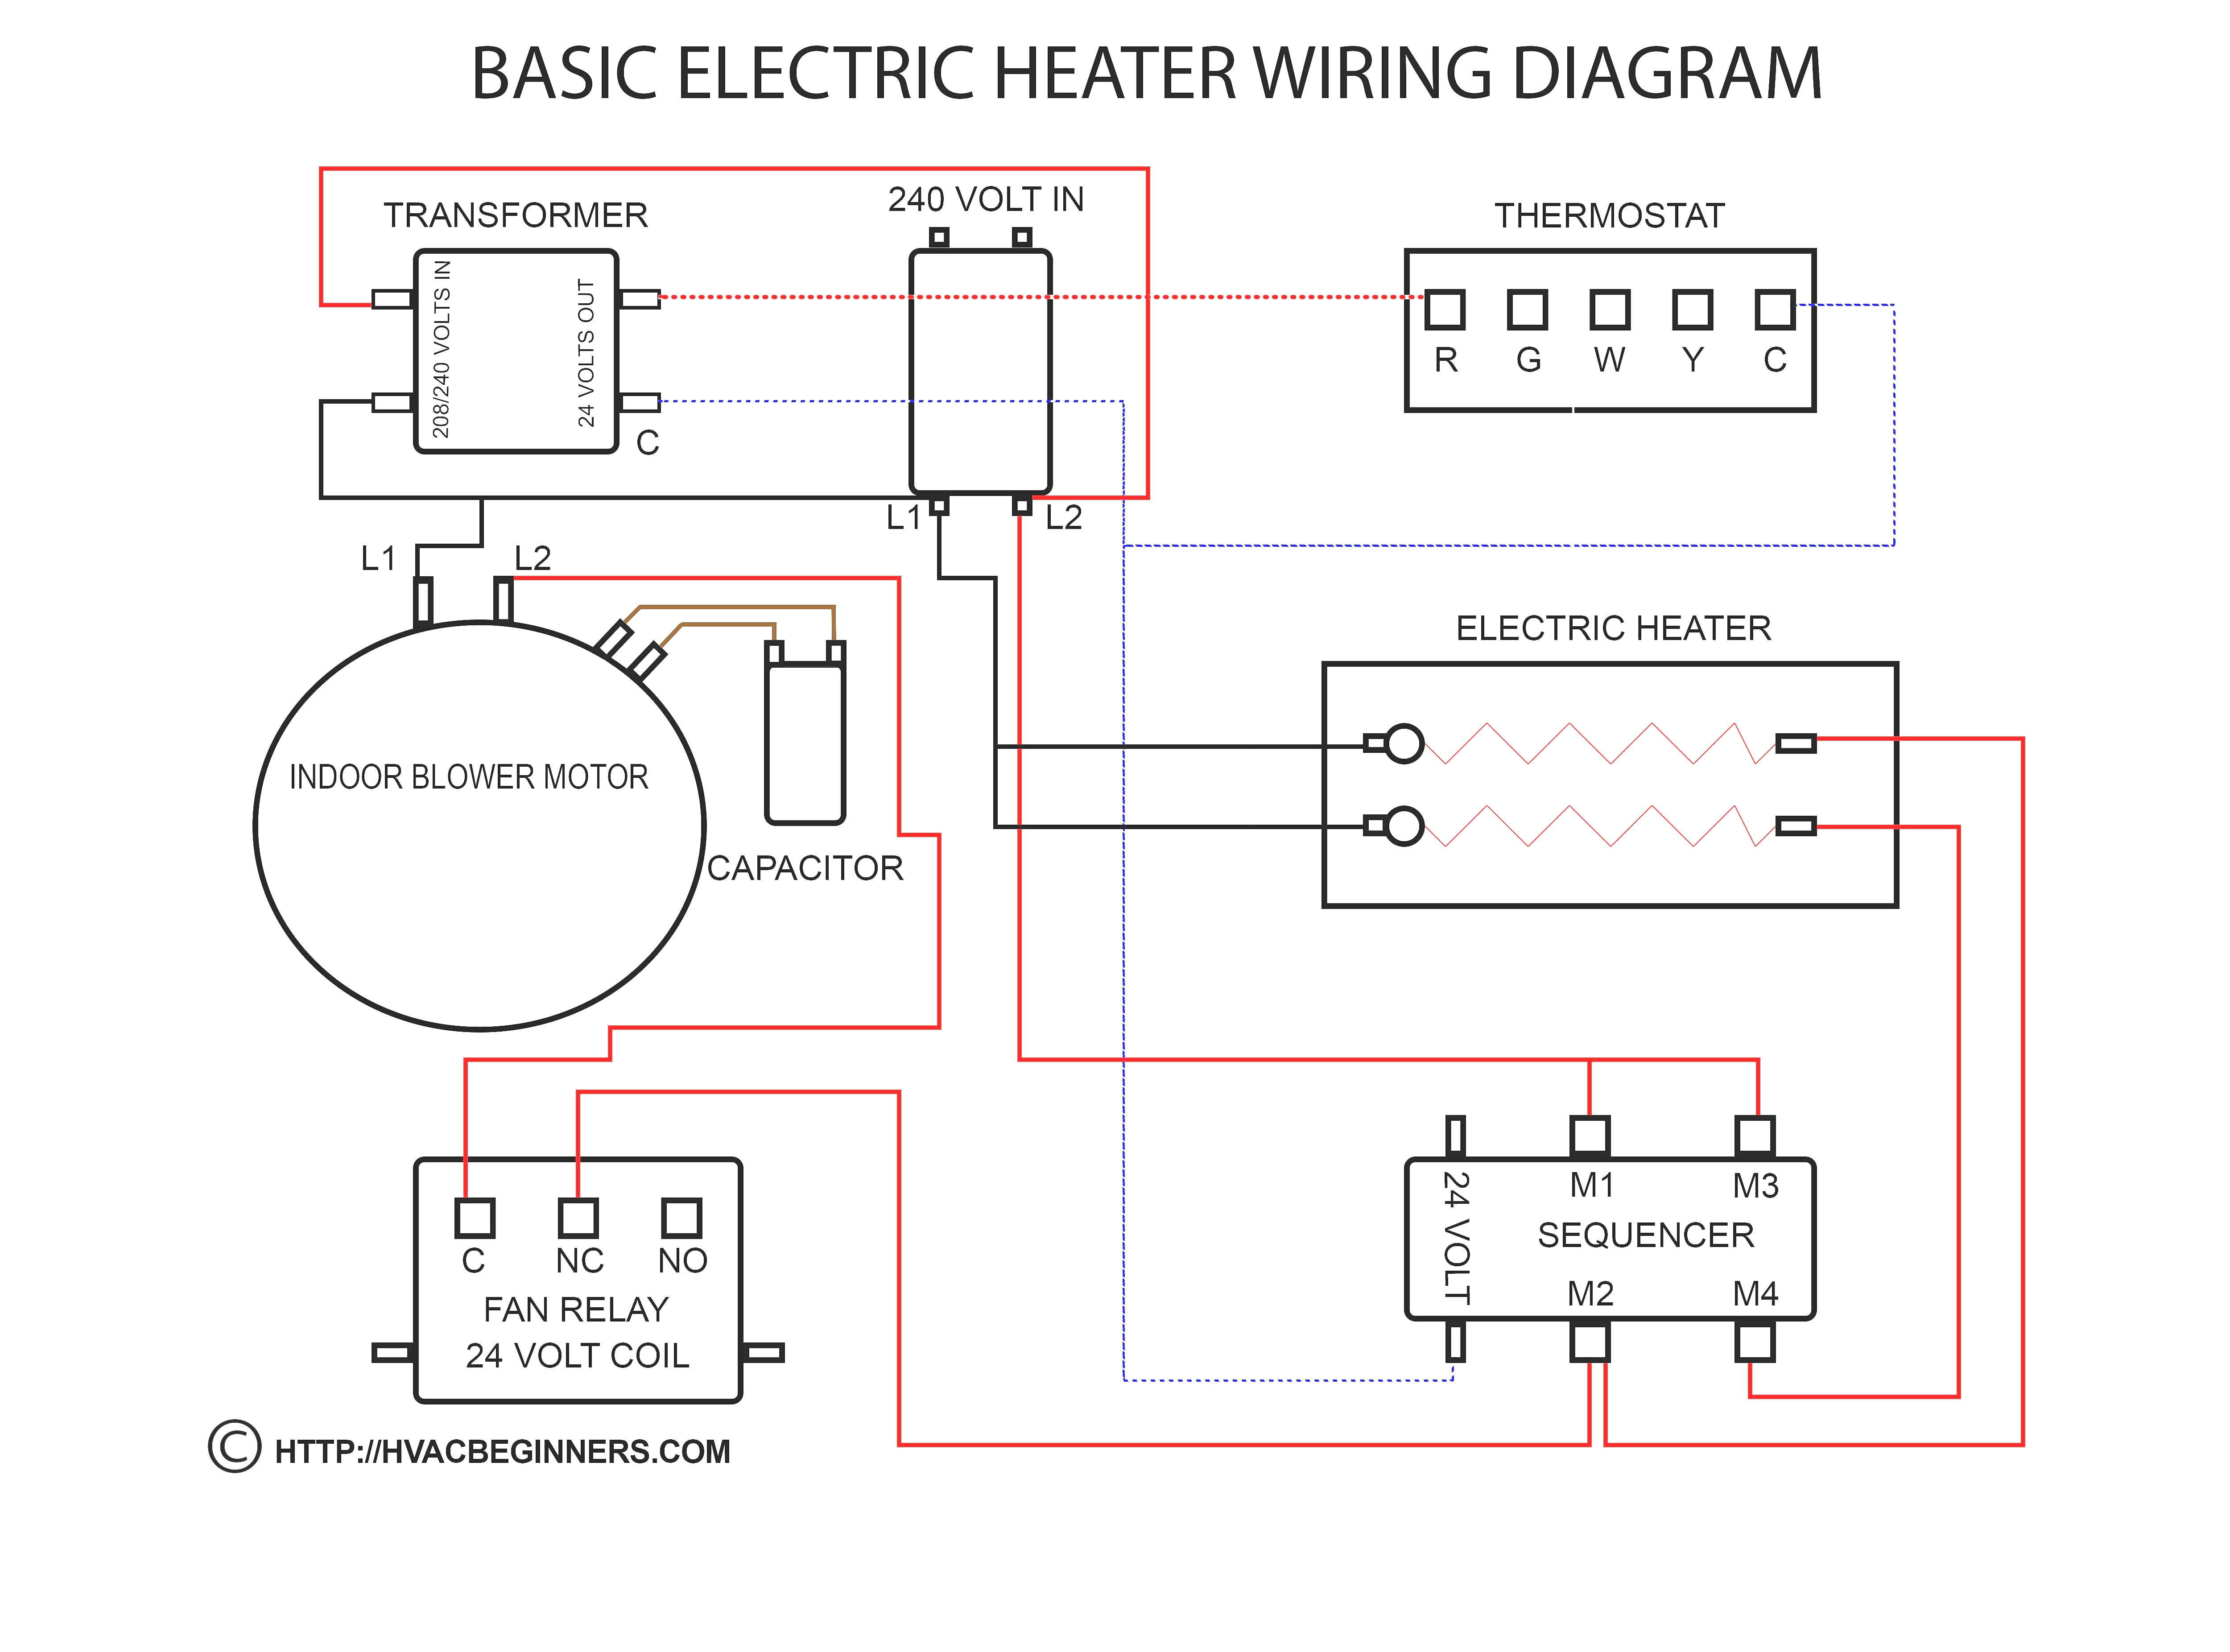 cscr wire diagram wiring diagramcscr wiring diagram wiring library diagram a4ac wire diagrams general wiring diagram